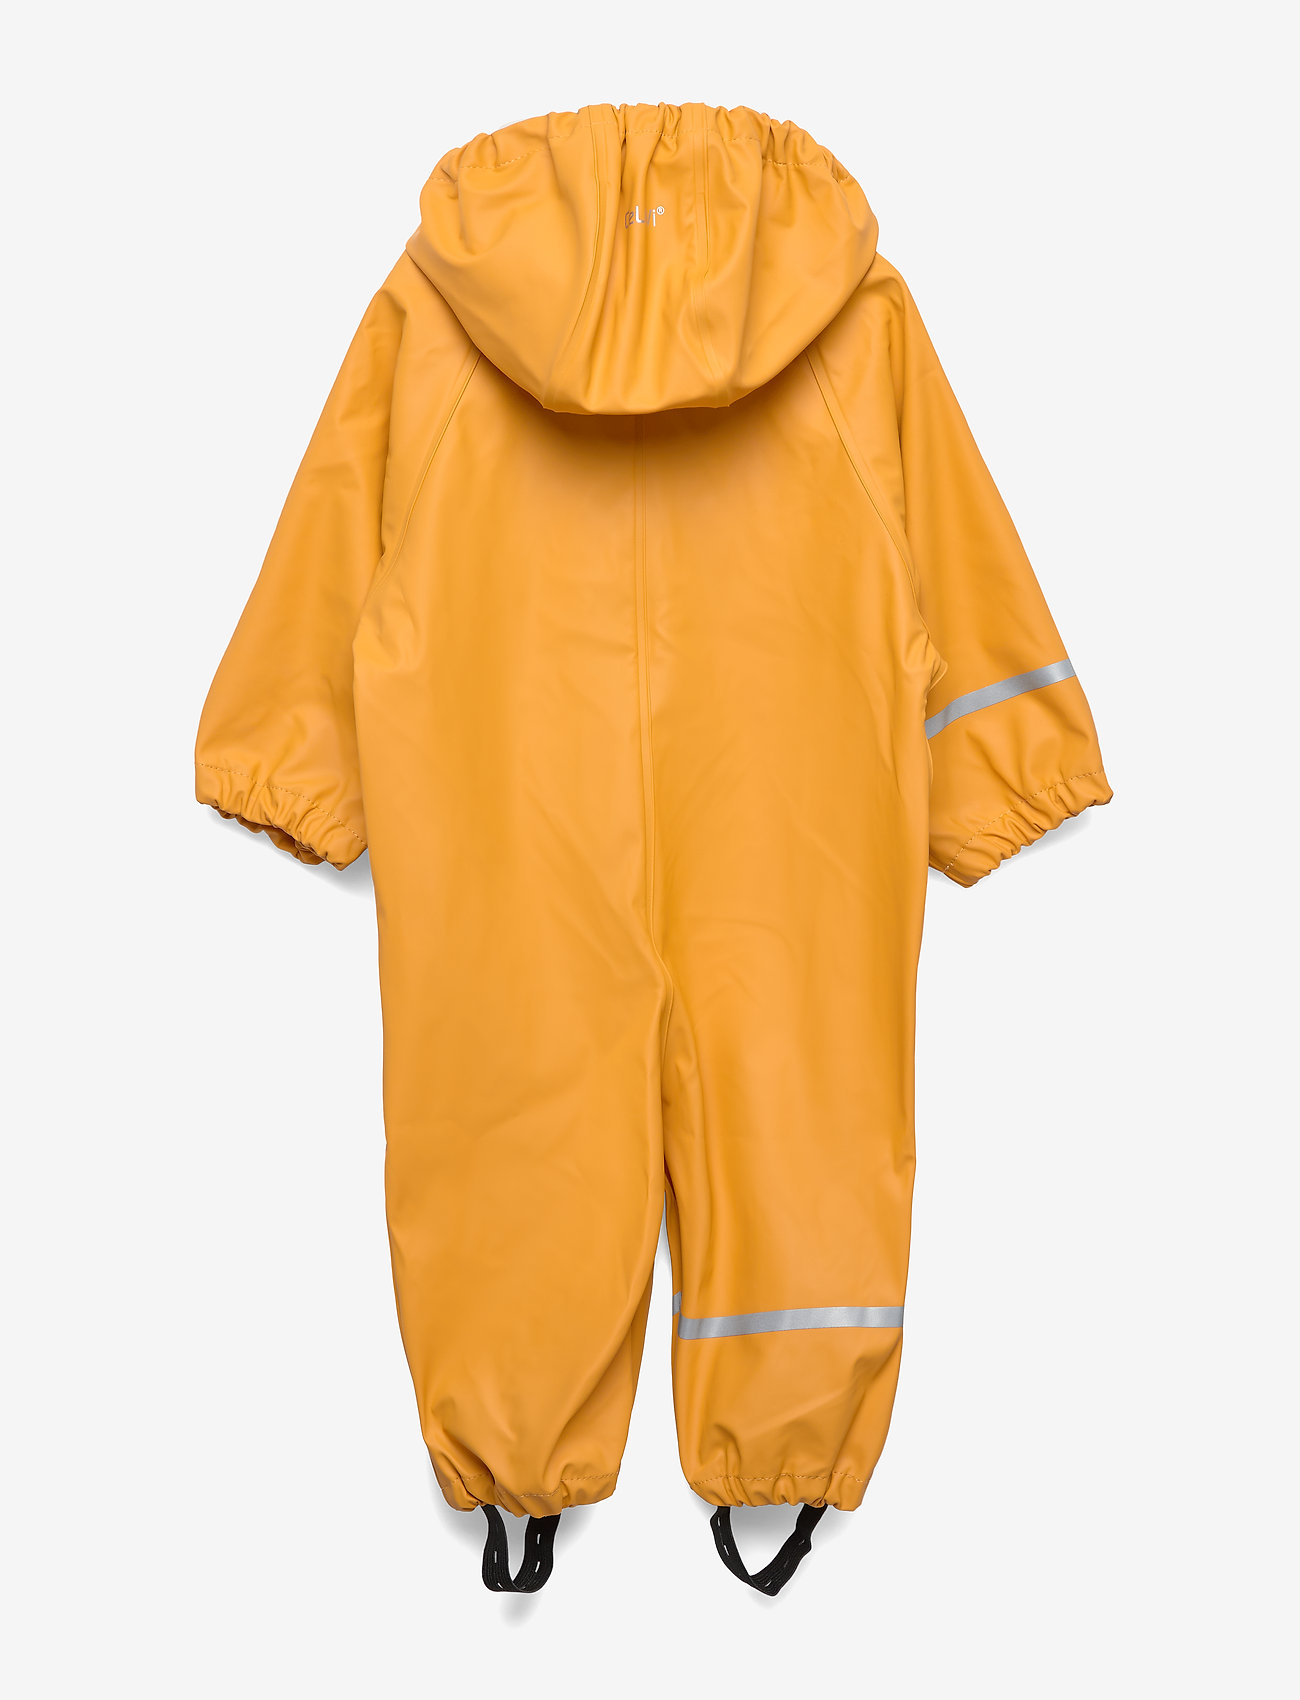 CeLaVi - Rainwear suit -Solid PU - regenkleding - mineral yellow - 1